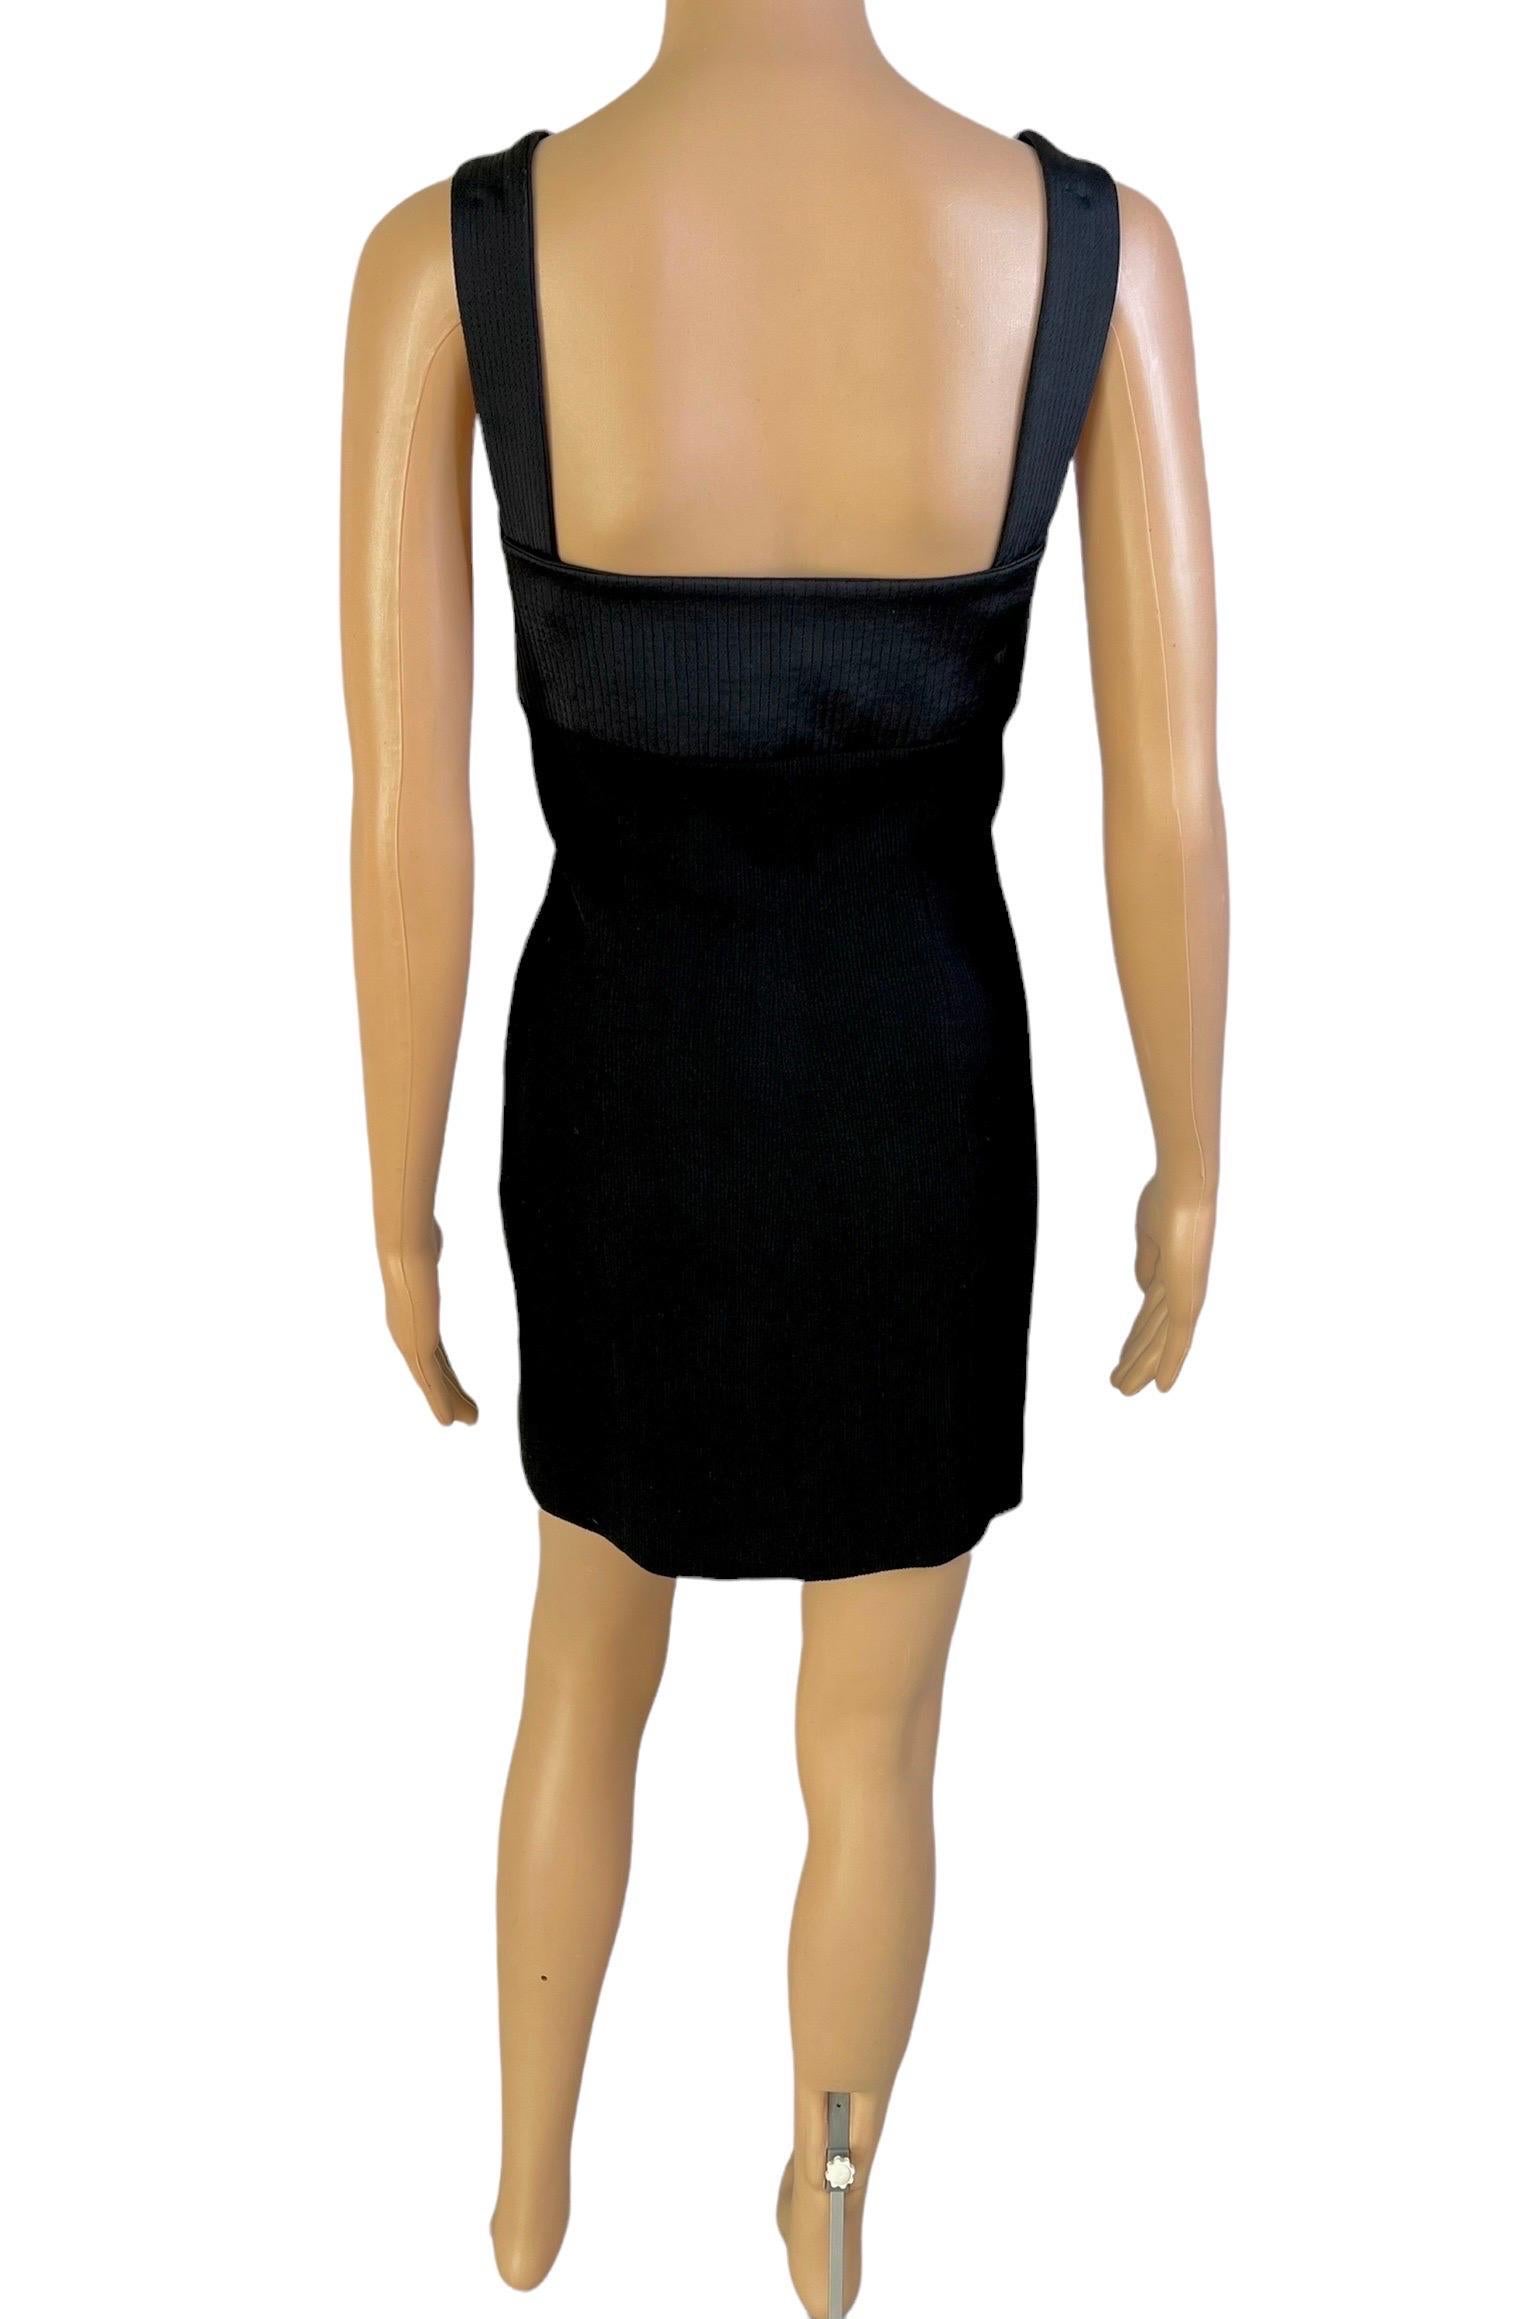 Gianni Versace S/S 1992 Couture Bustier Corset Lace Up Black Mini Dress For Sale 5